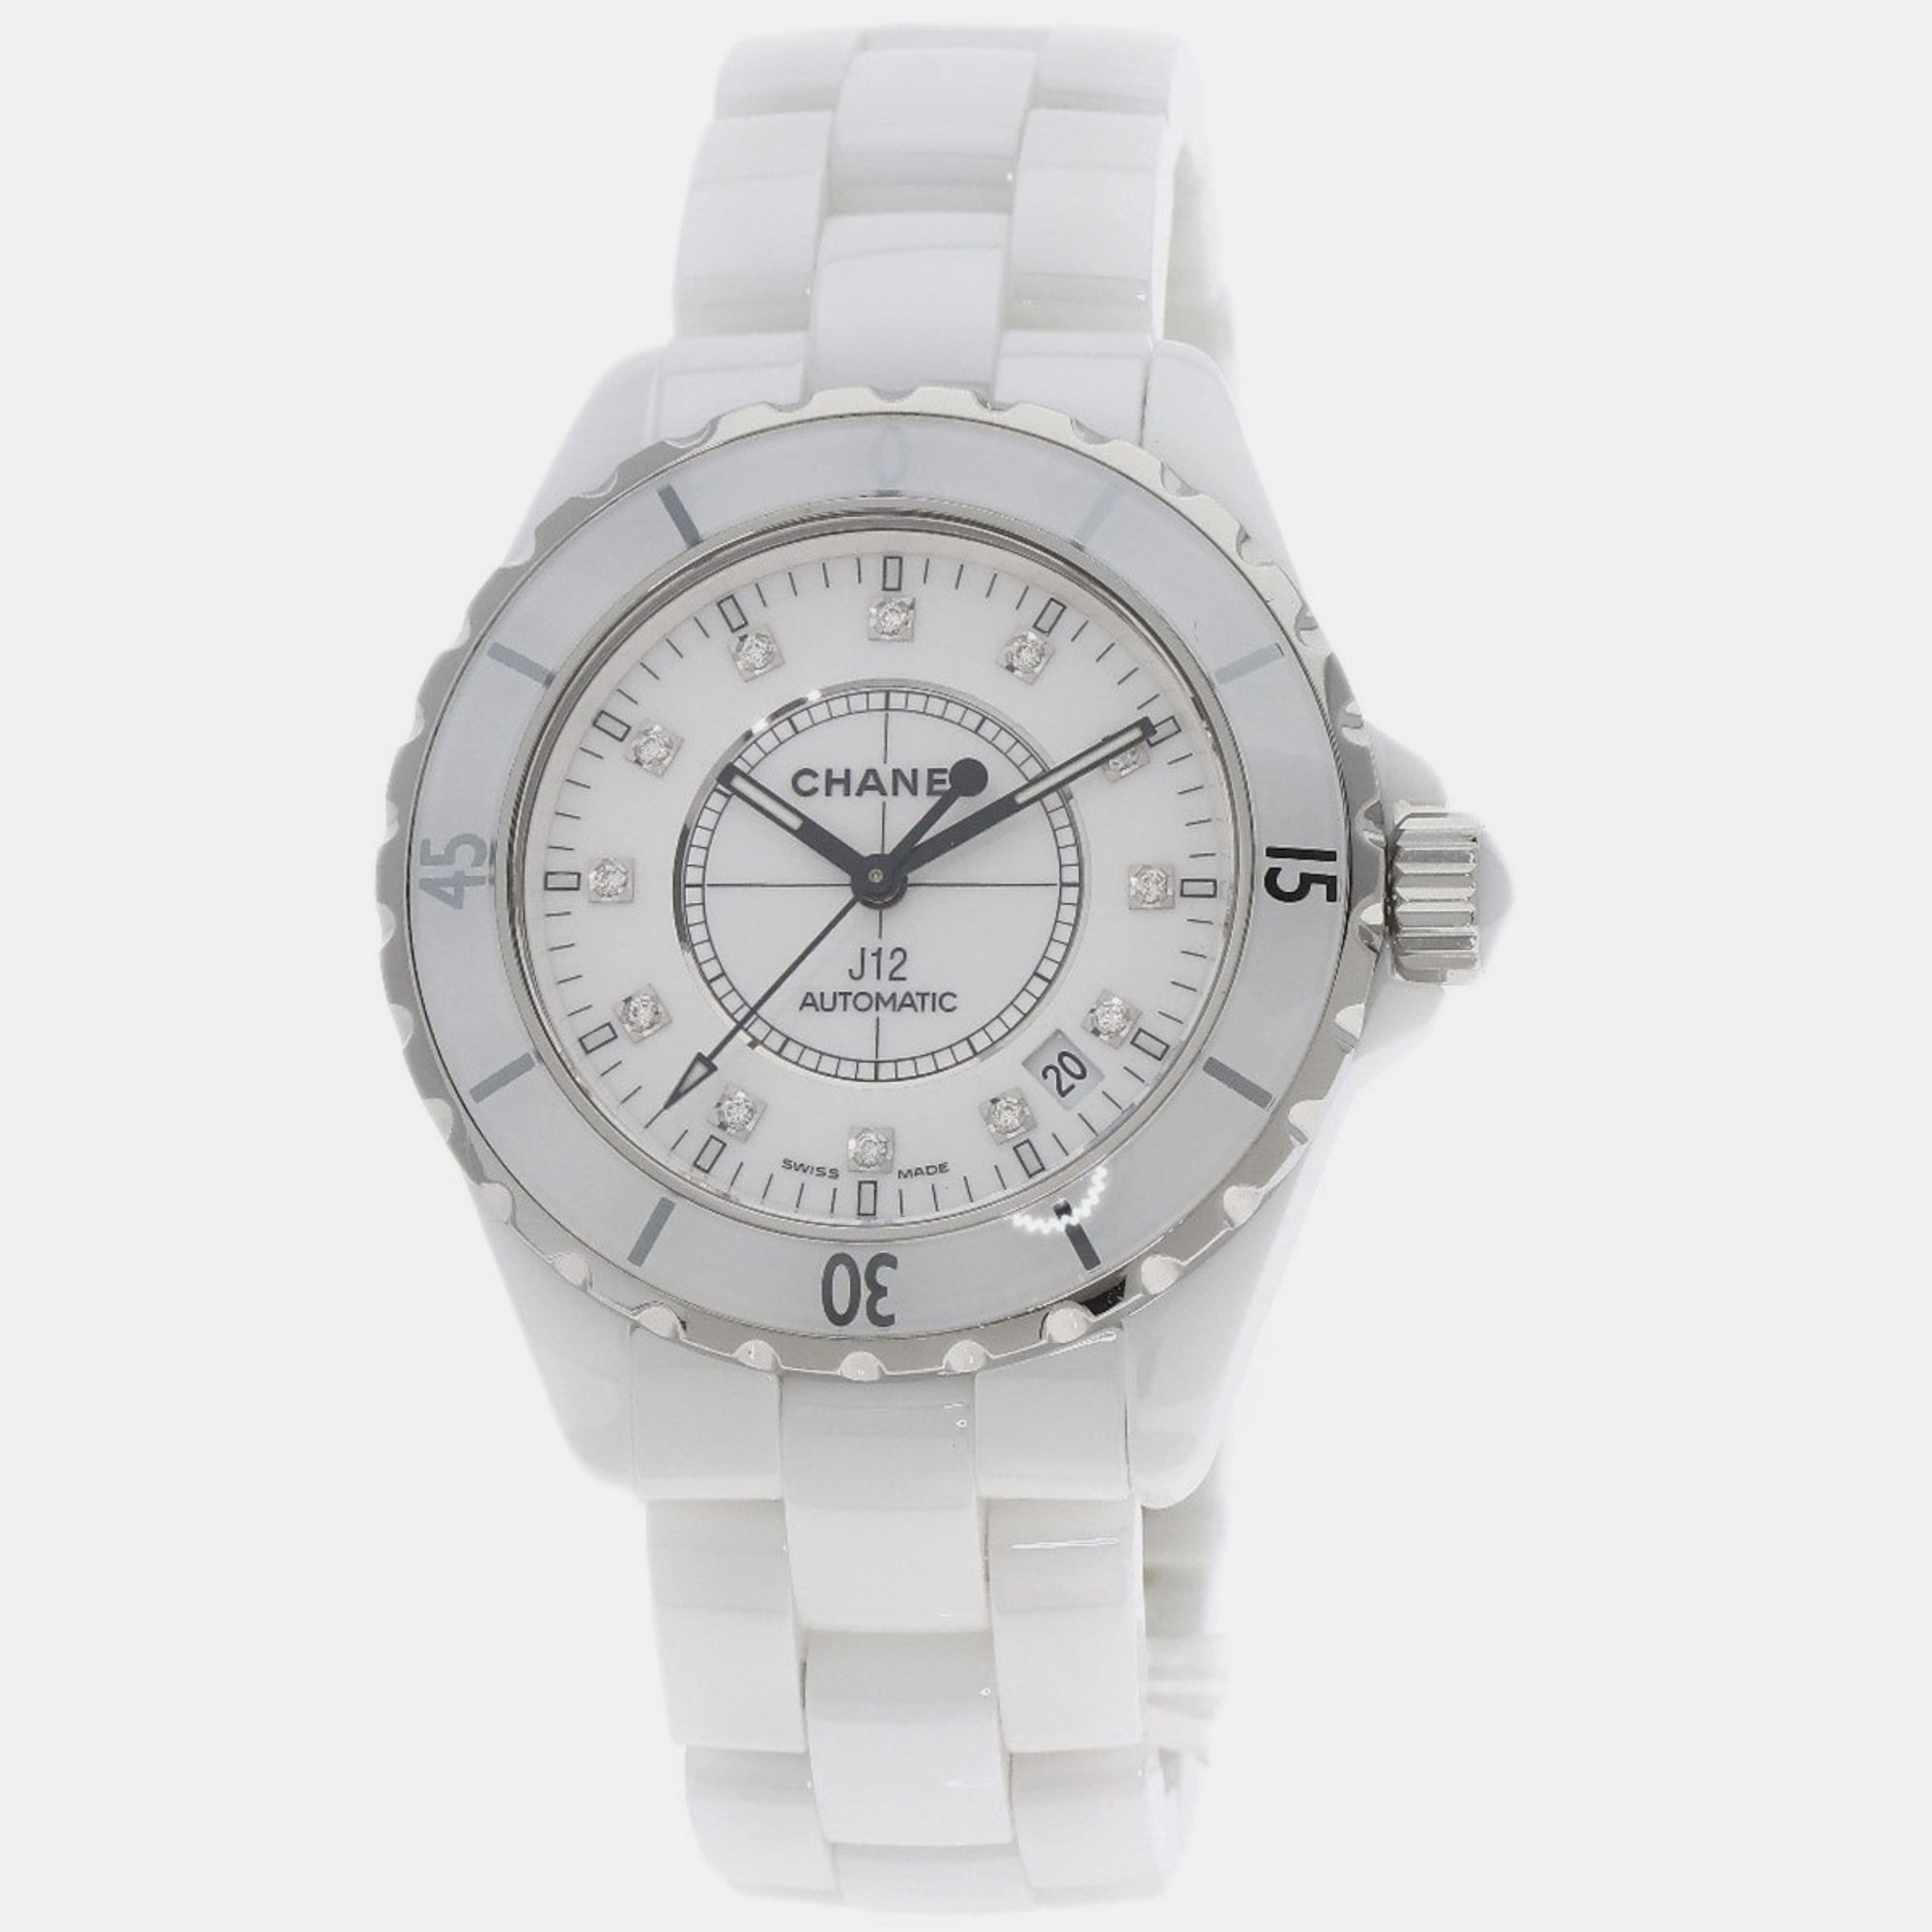 Chanel white ceramic j12 h1629 automatic men's wristwatch 46 mm